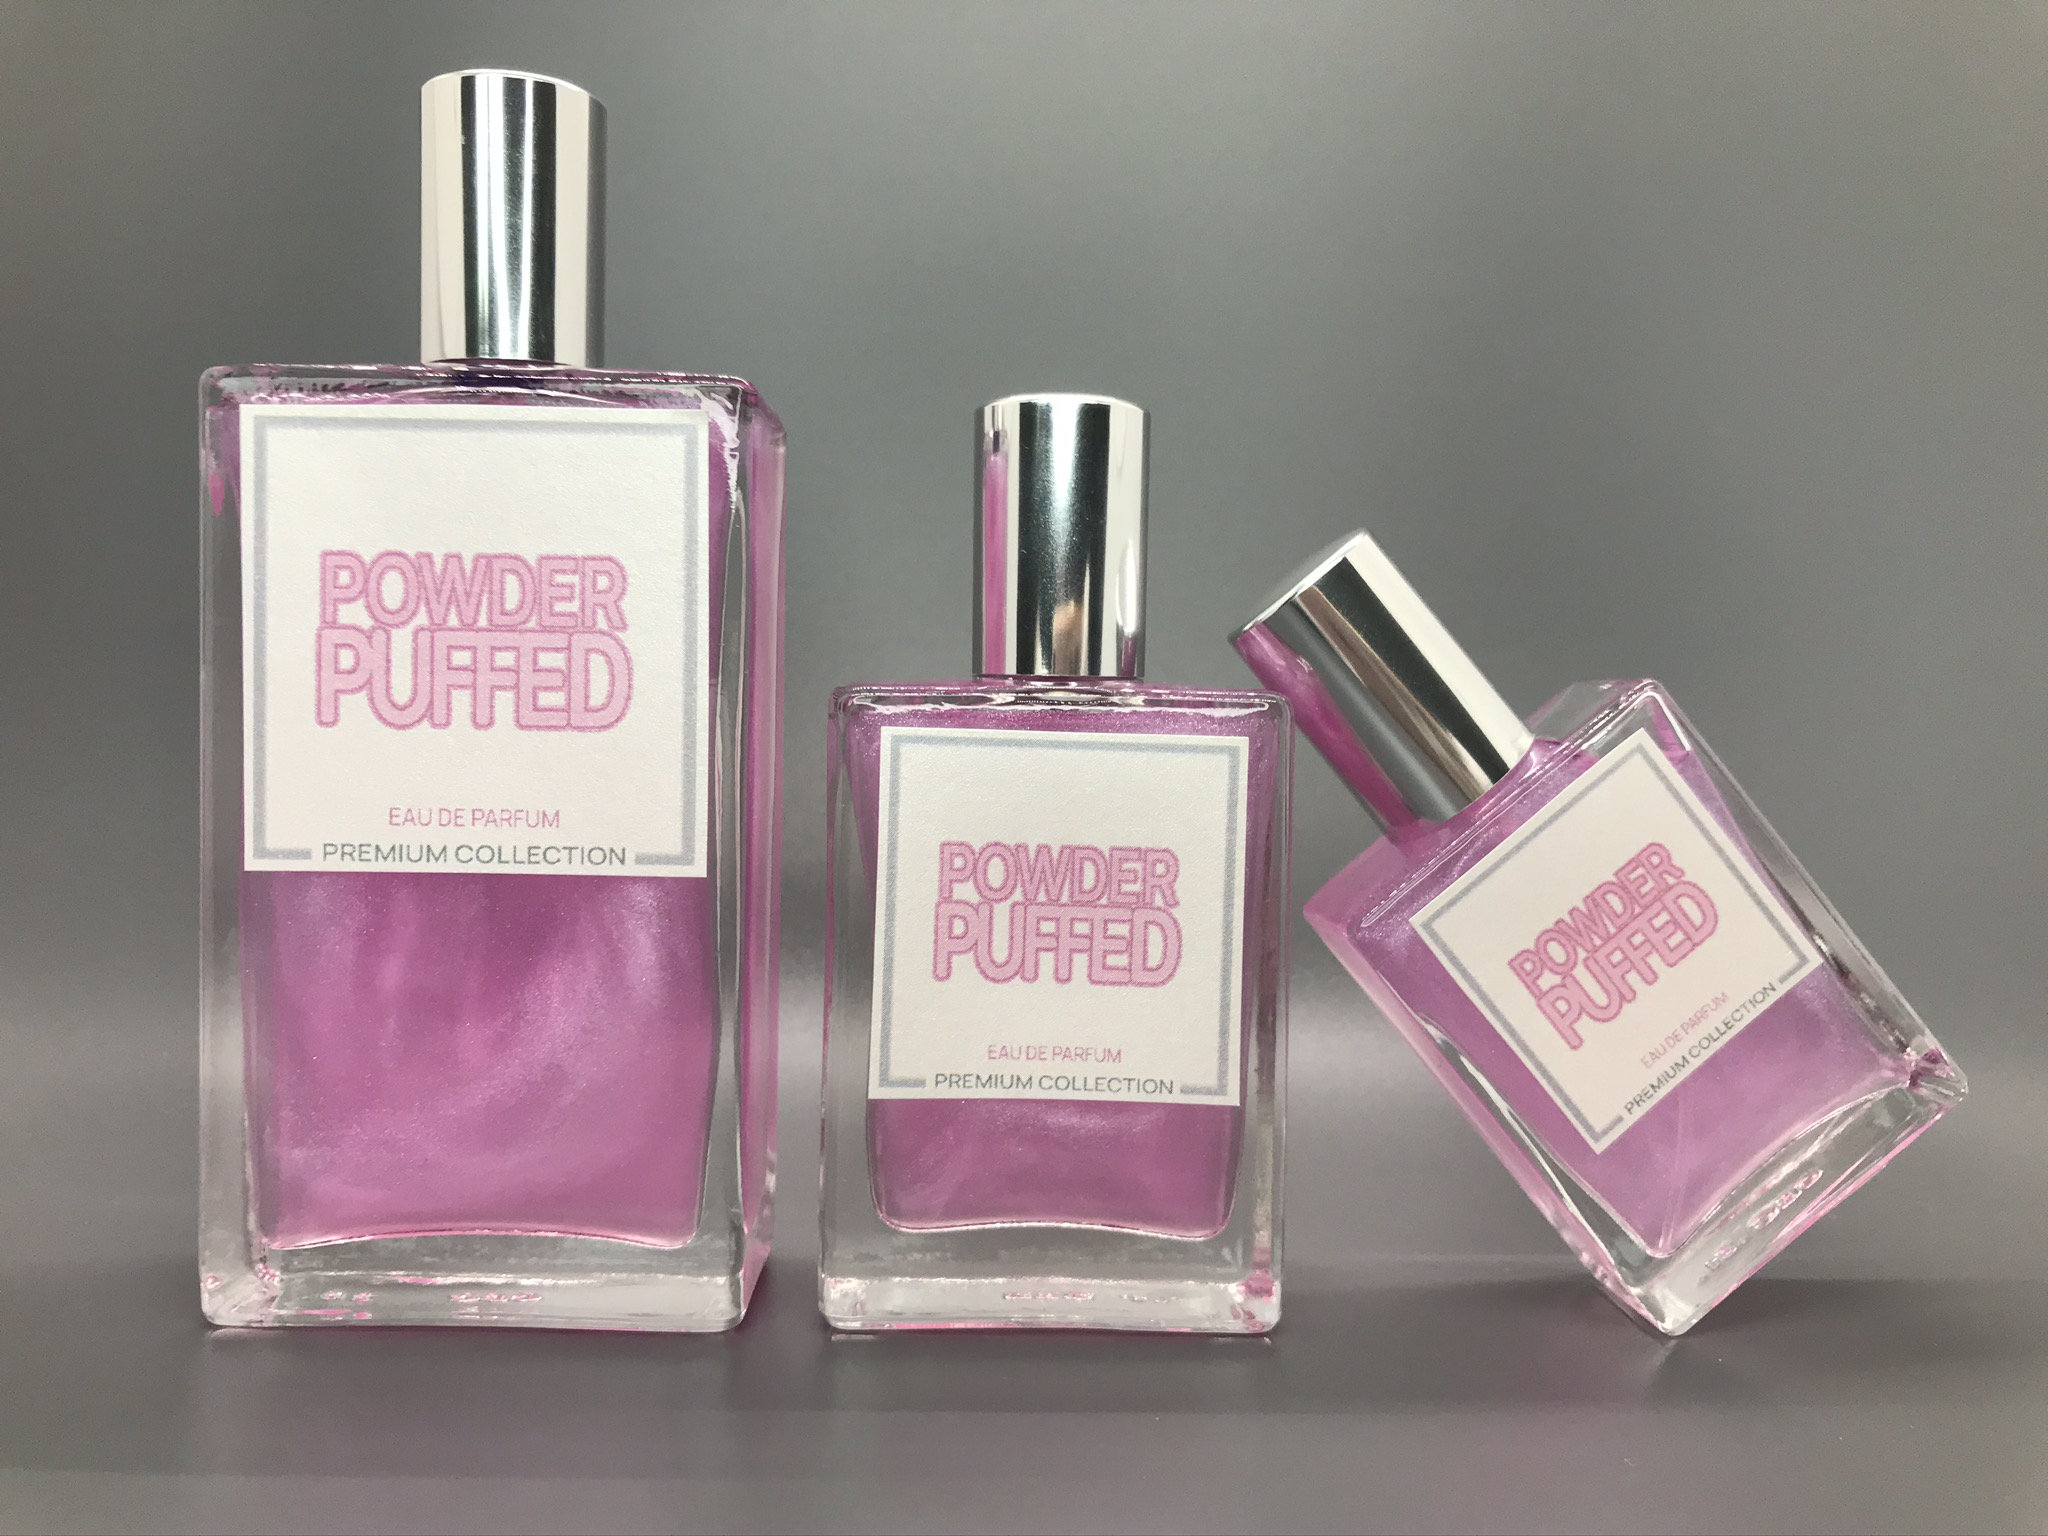 Womens Perfume Cherry Floats Eau De Parfum Perfume for Her 